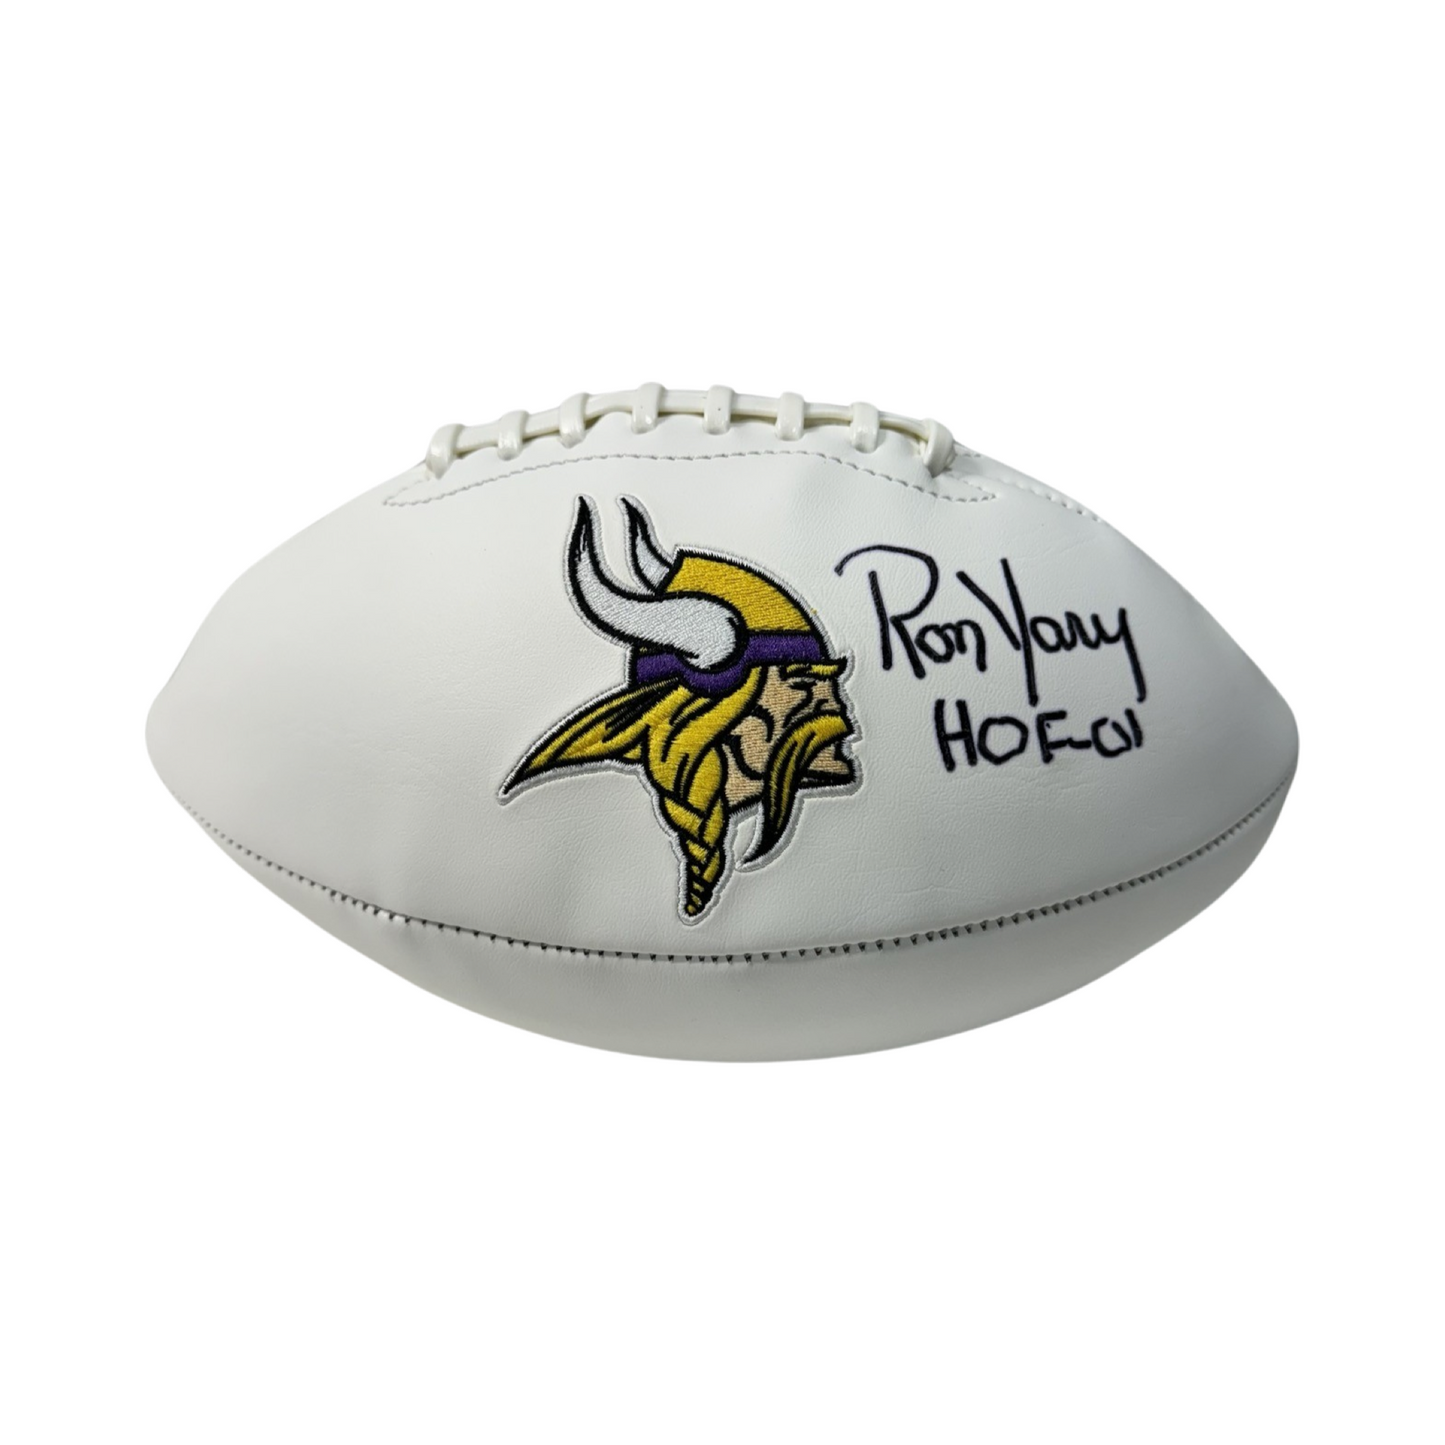 Ron Yary Autographed Minnesota Vikings Logo Football "HOF 01" Inscription Schwartz Sports